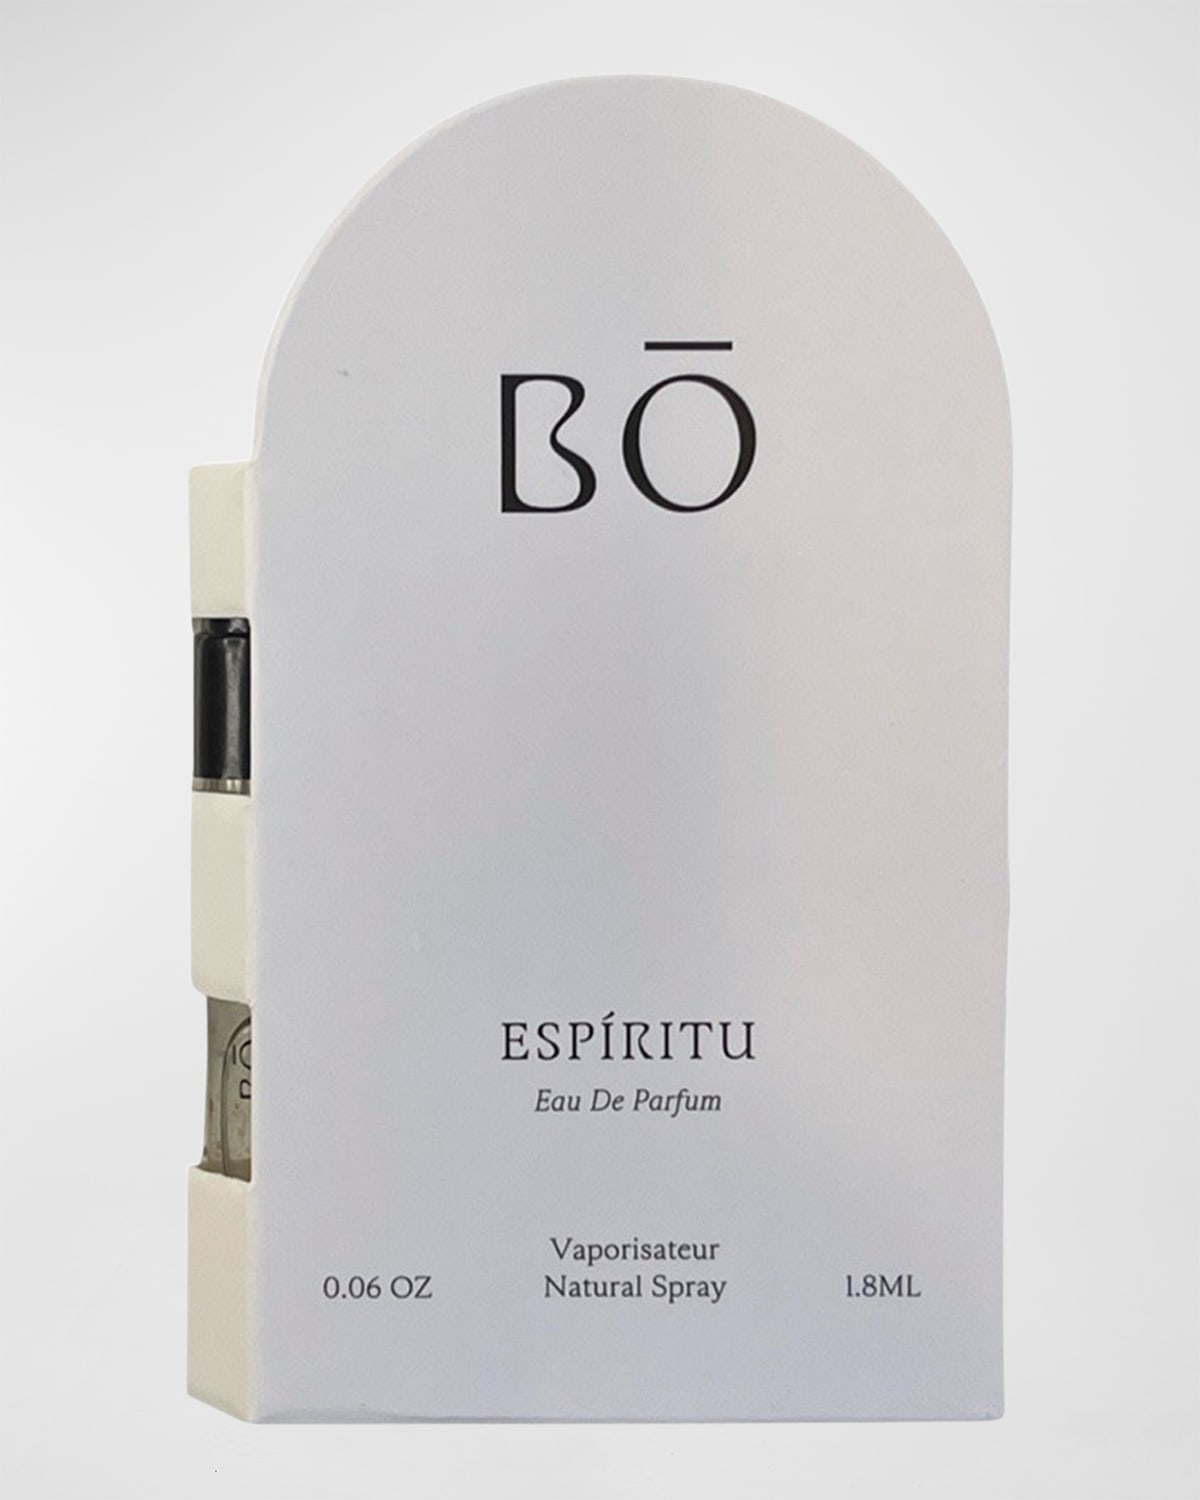 1.8 mL Espiritu Eau de Parfum, Yours with any $65 House of Bo Fragrances Purchase